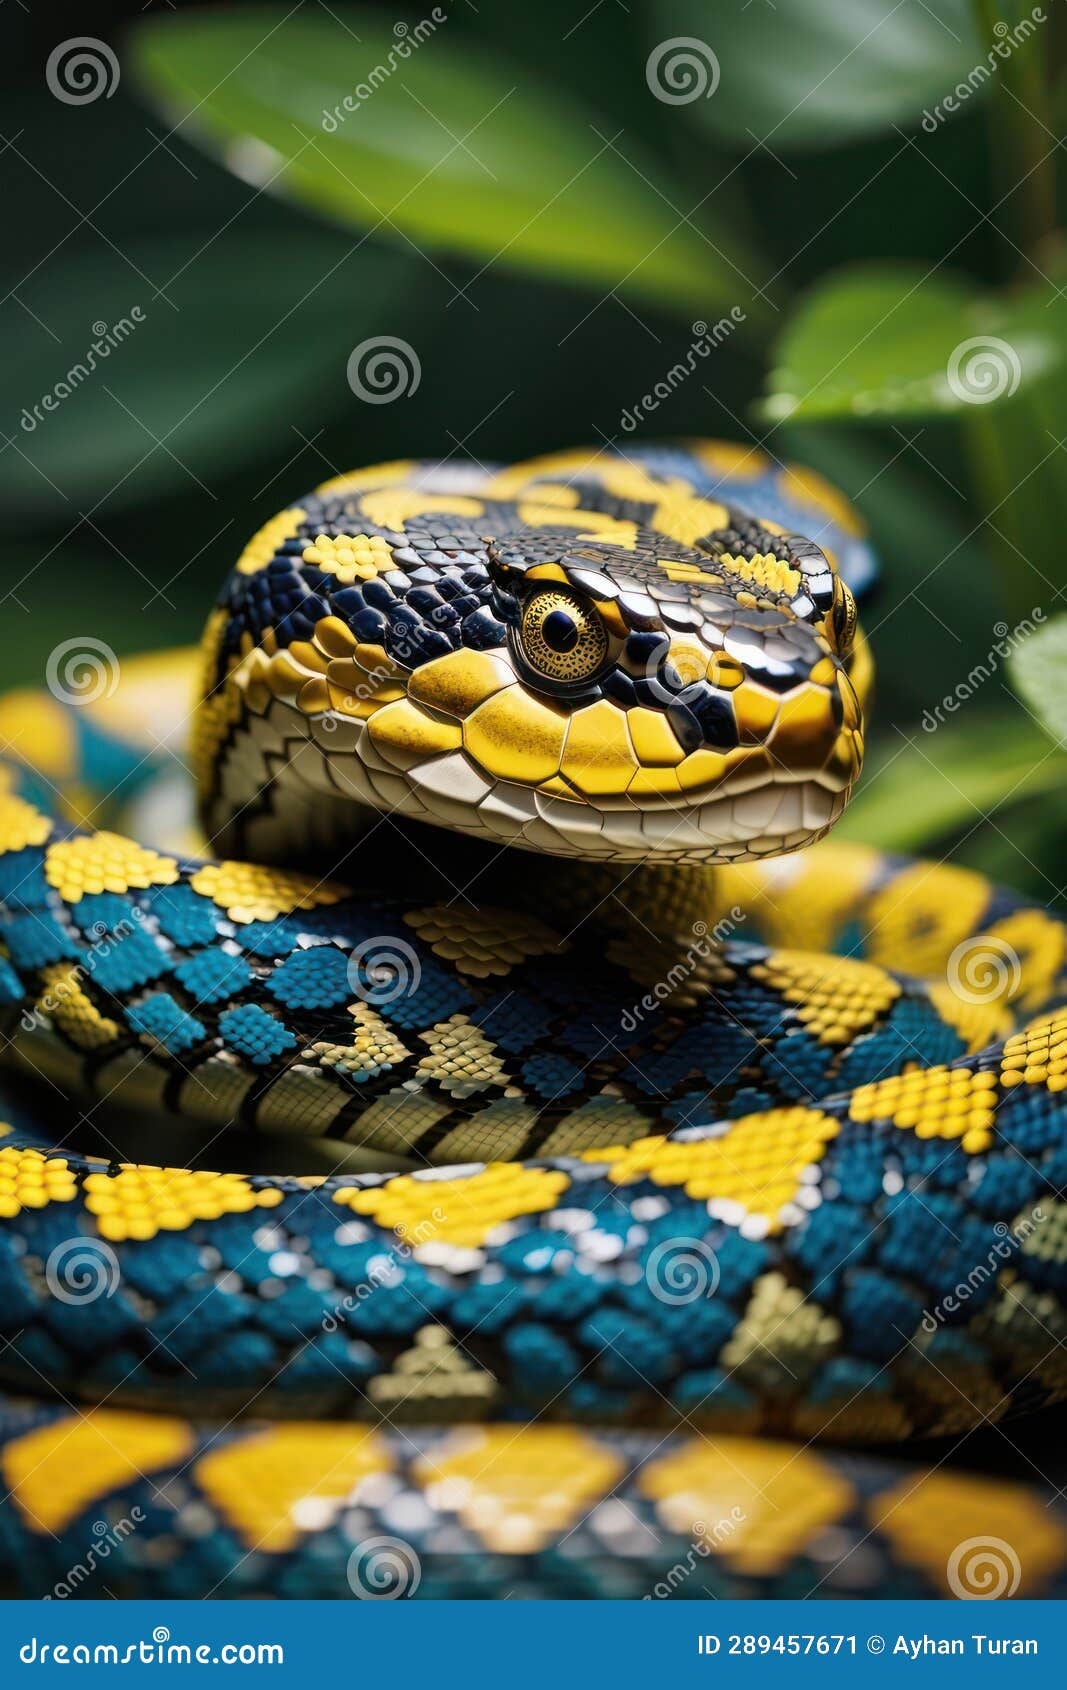 danger snake macro shot , dangerous snake close-up